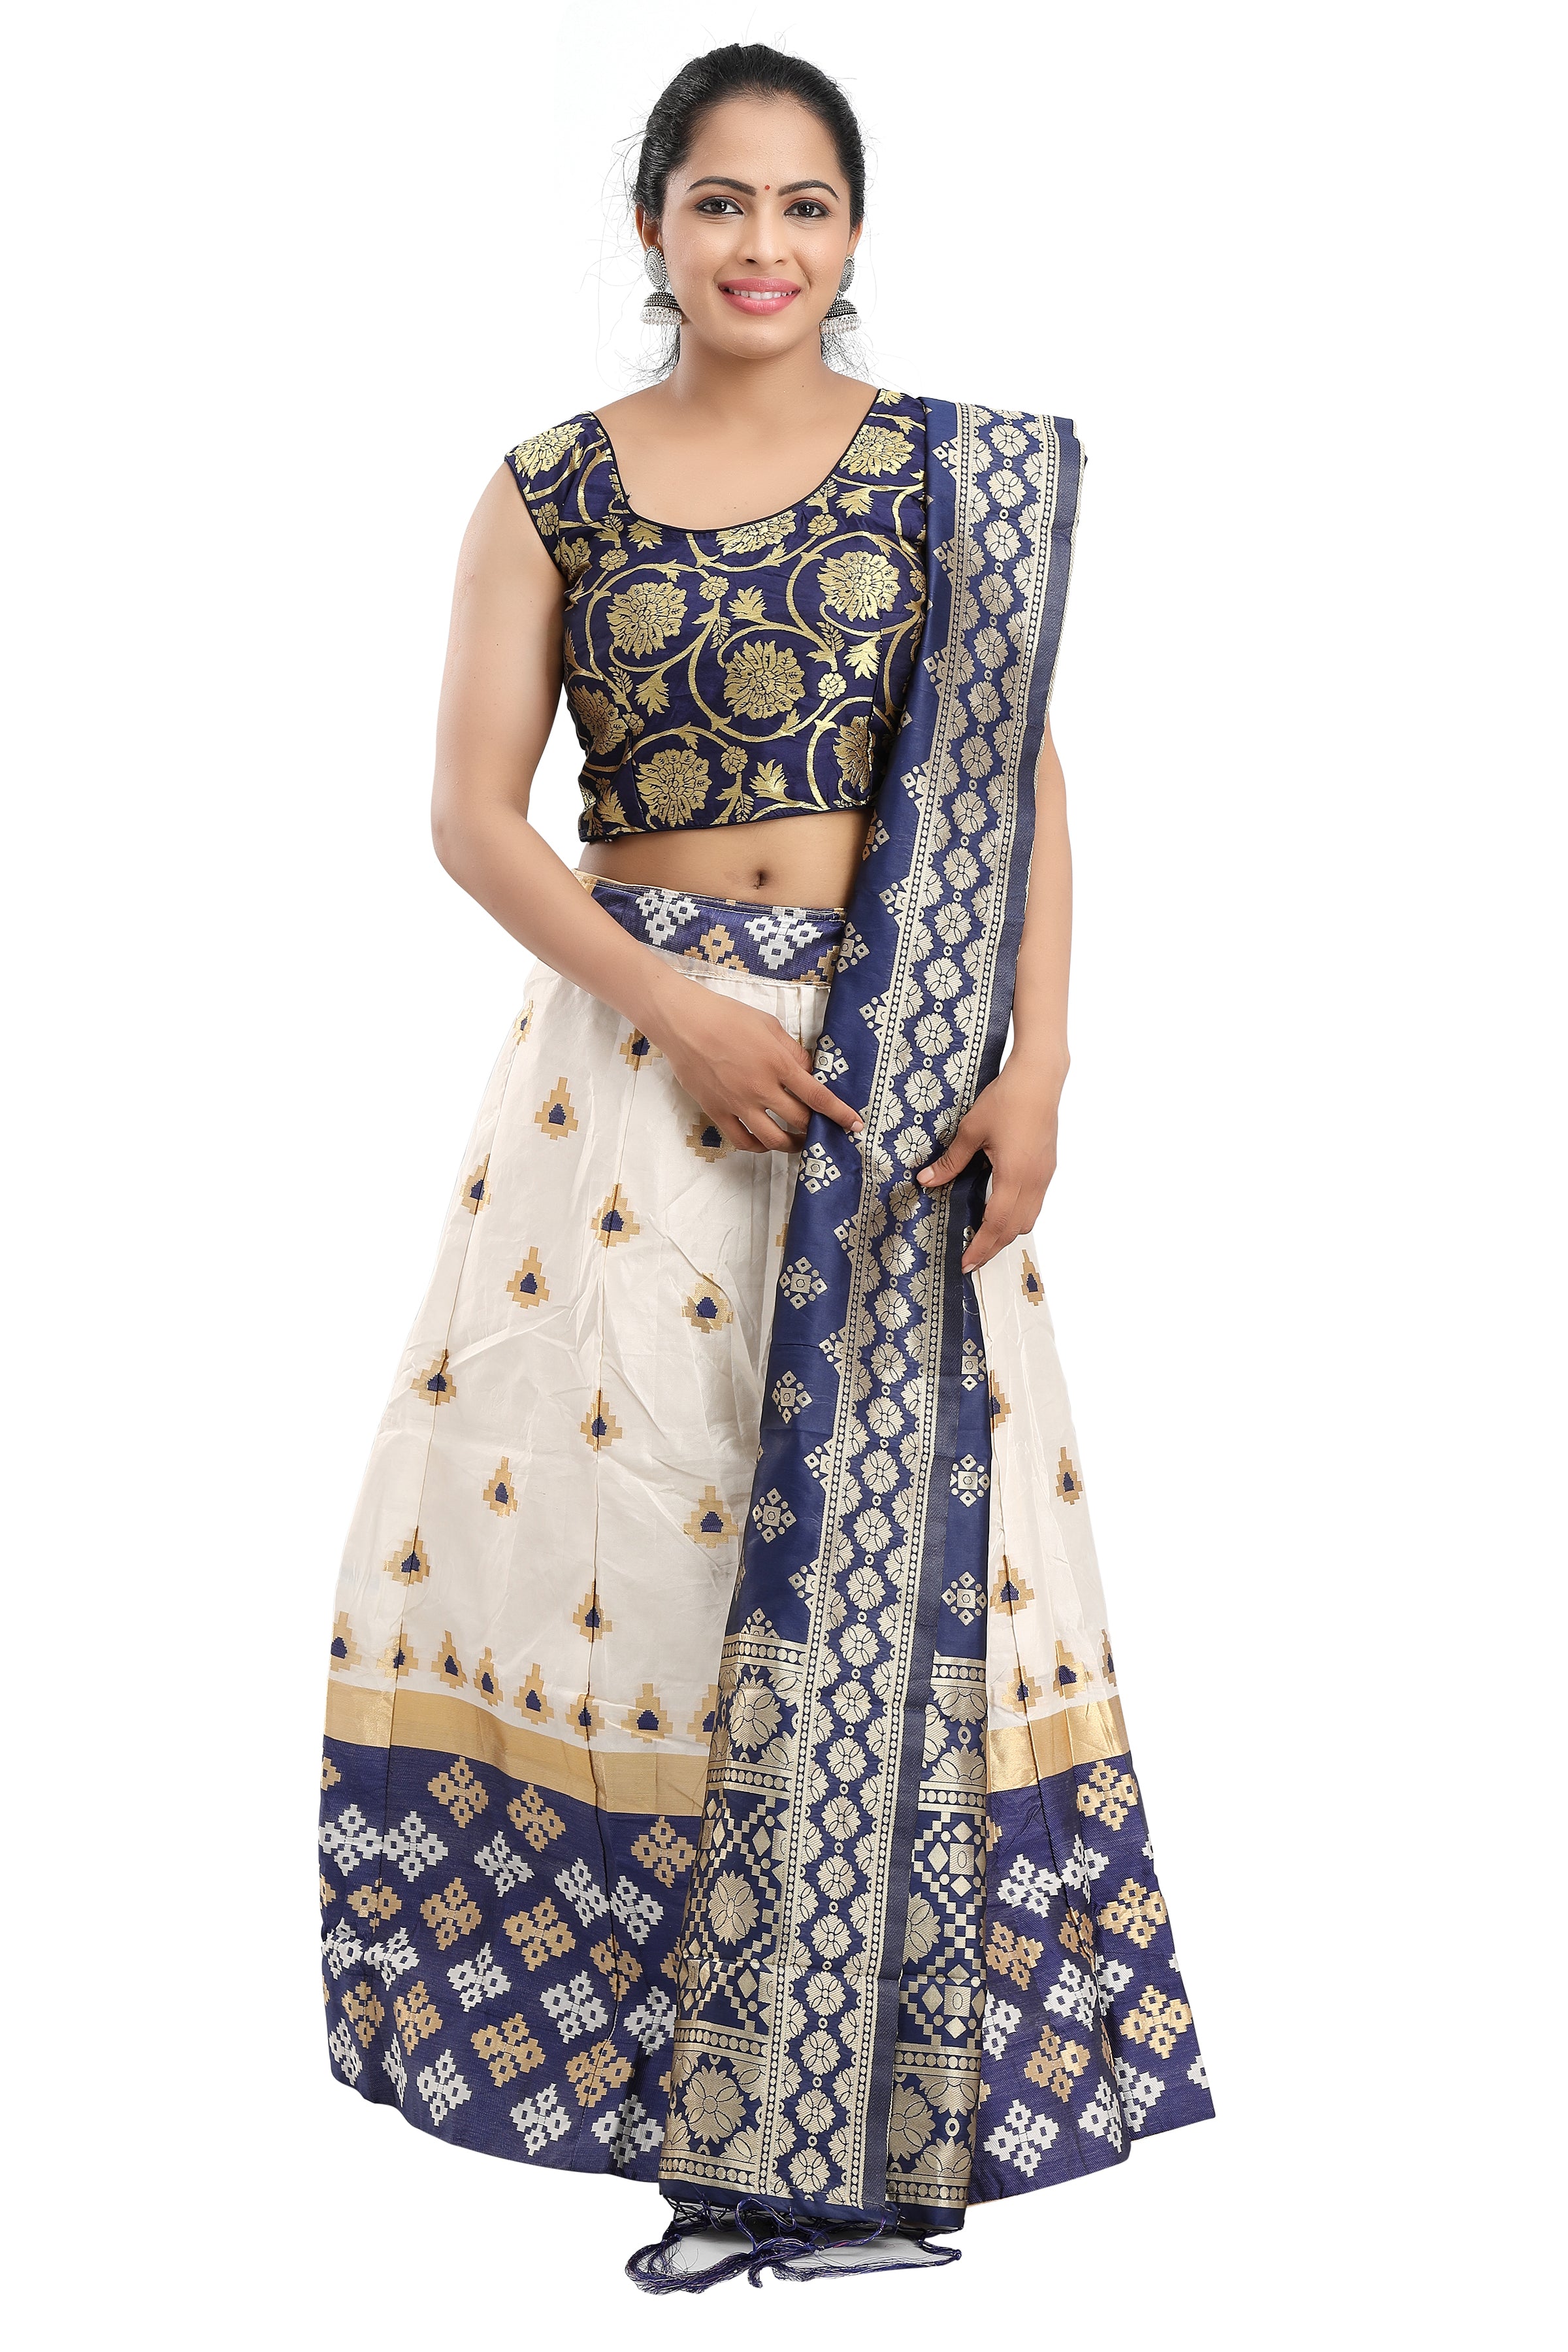 Women's Banarasi Blue On White Brocade Lehenga With Ready Made Blouse, Dupatta, Cane And Lining. - MANOHARA